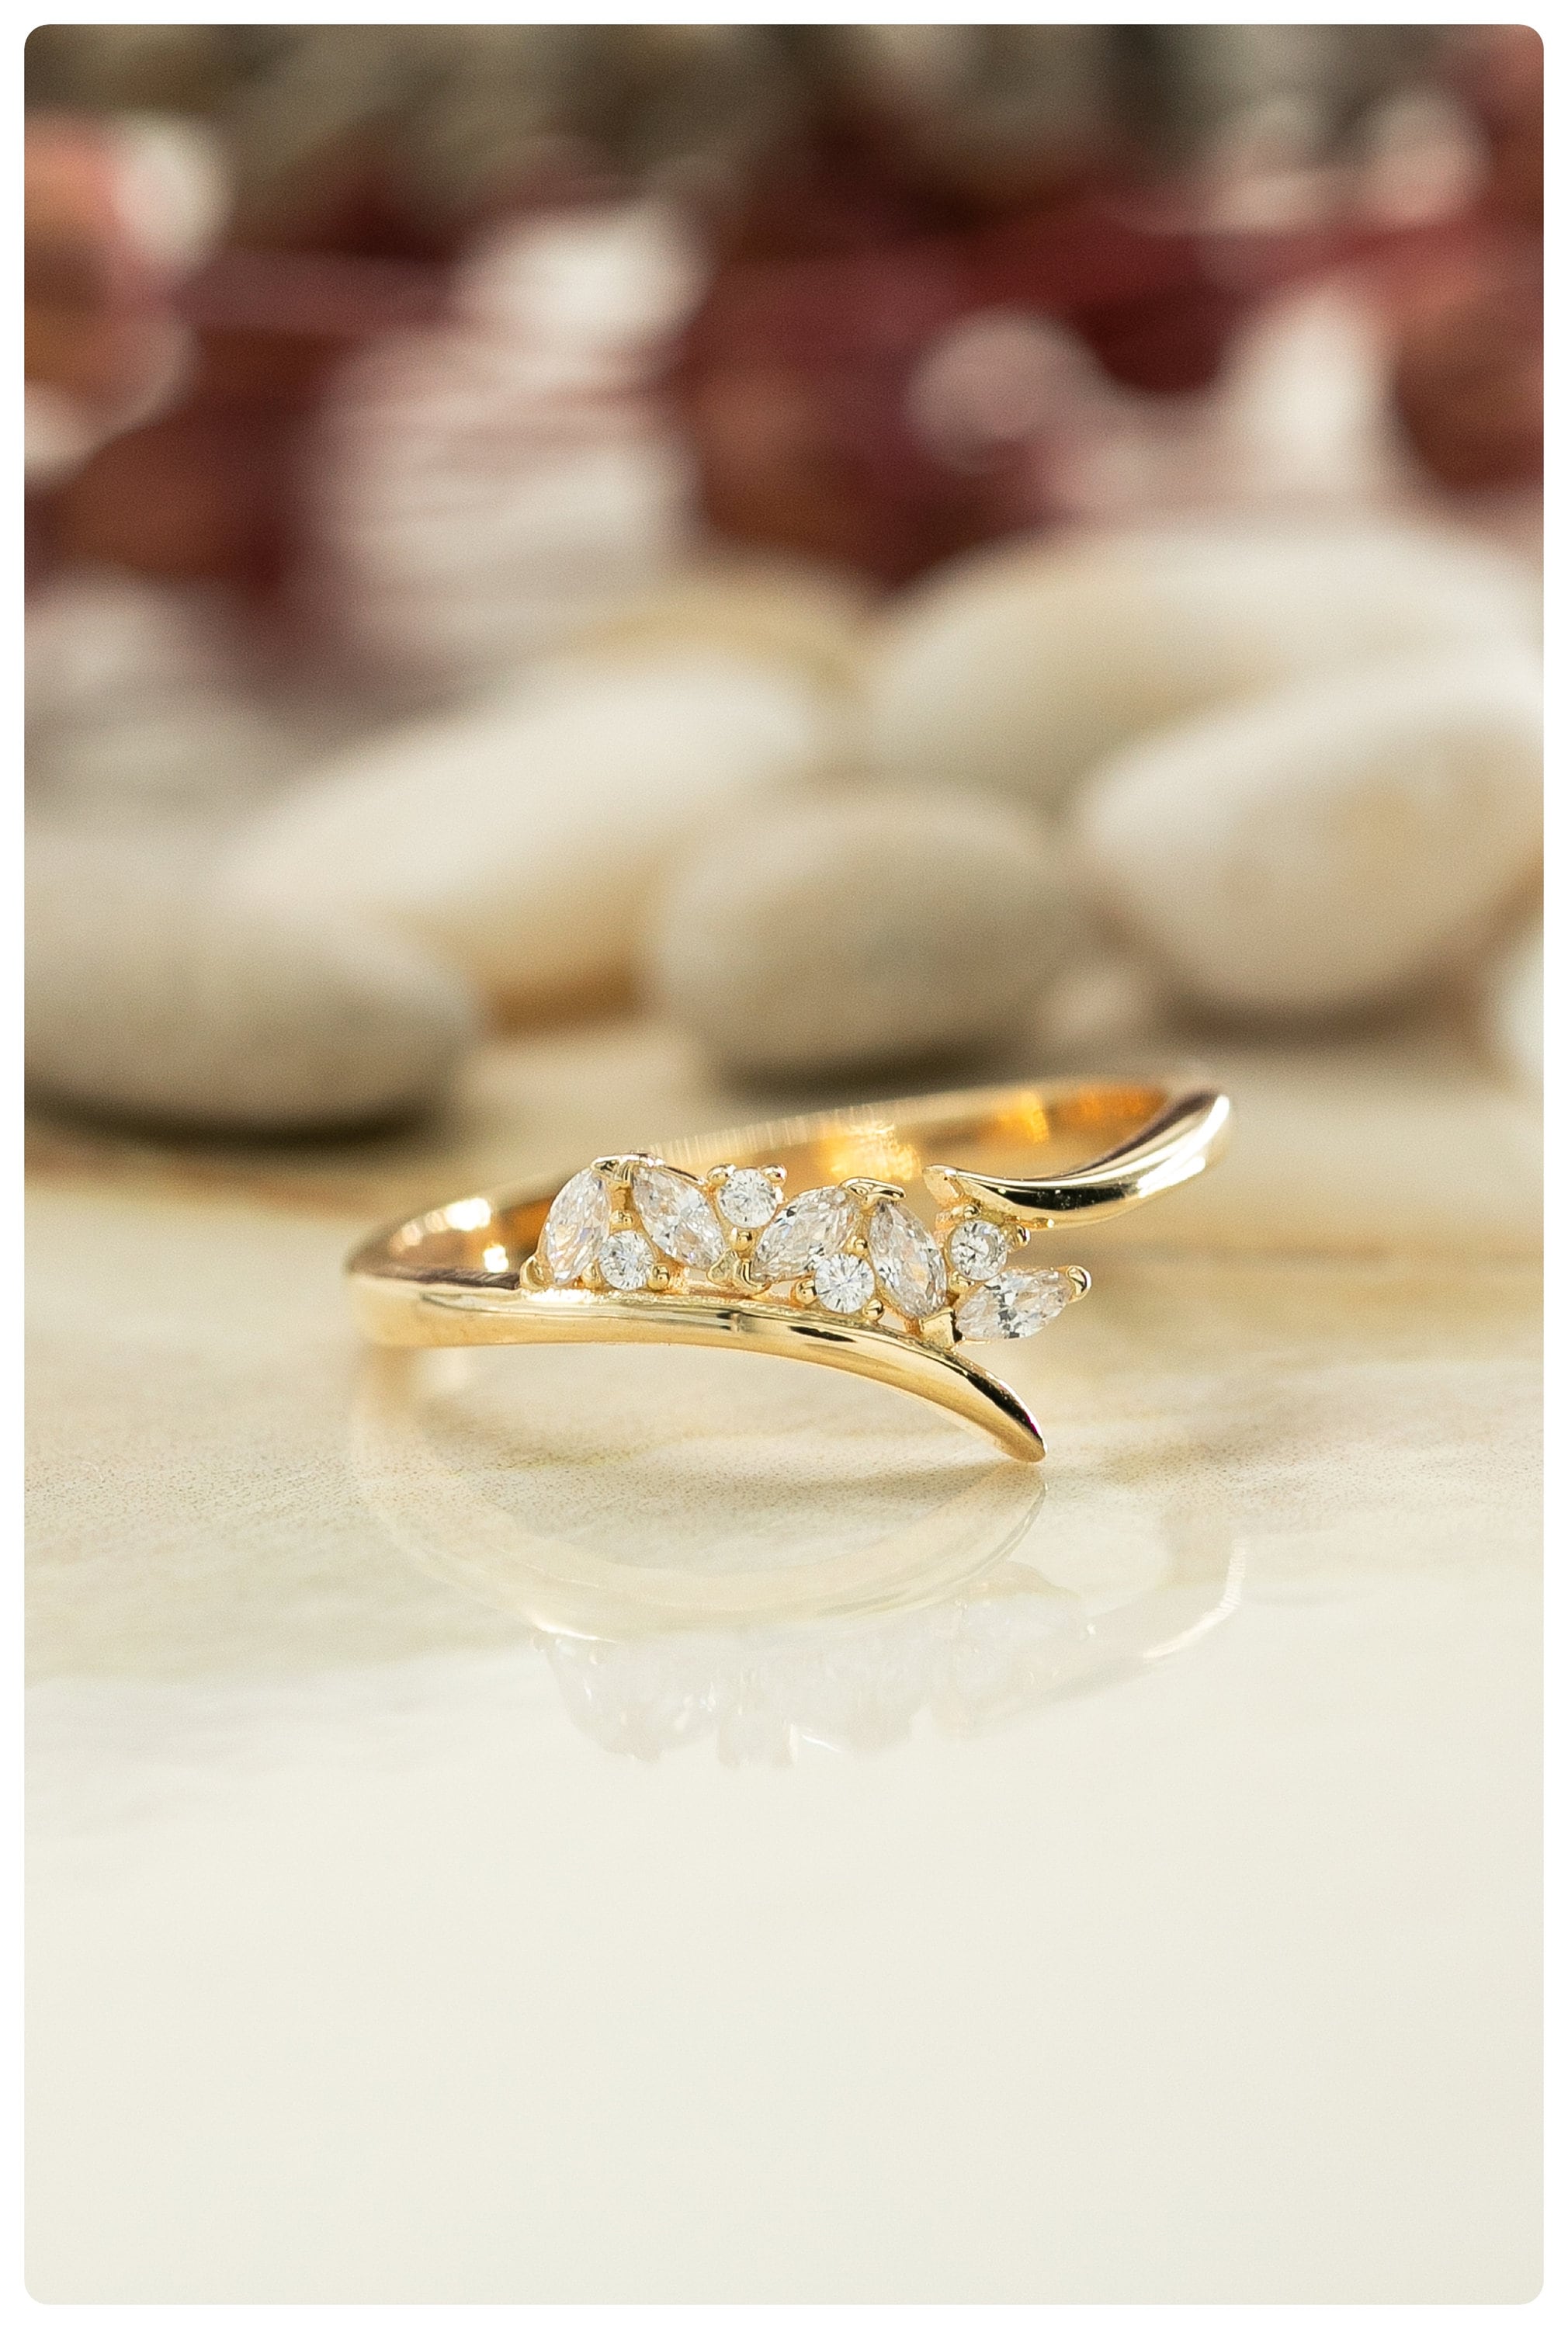 Gold Wedding Ring Women, 925 Sterling Silver, Diamond Stone, Wedding Ring for Her, Promise Ring, Engagement Ring, Groom Gift for Bride